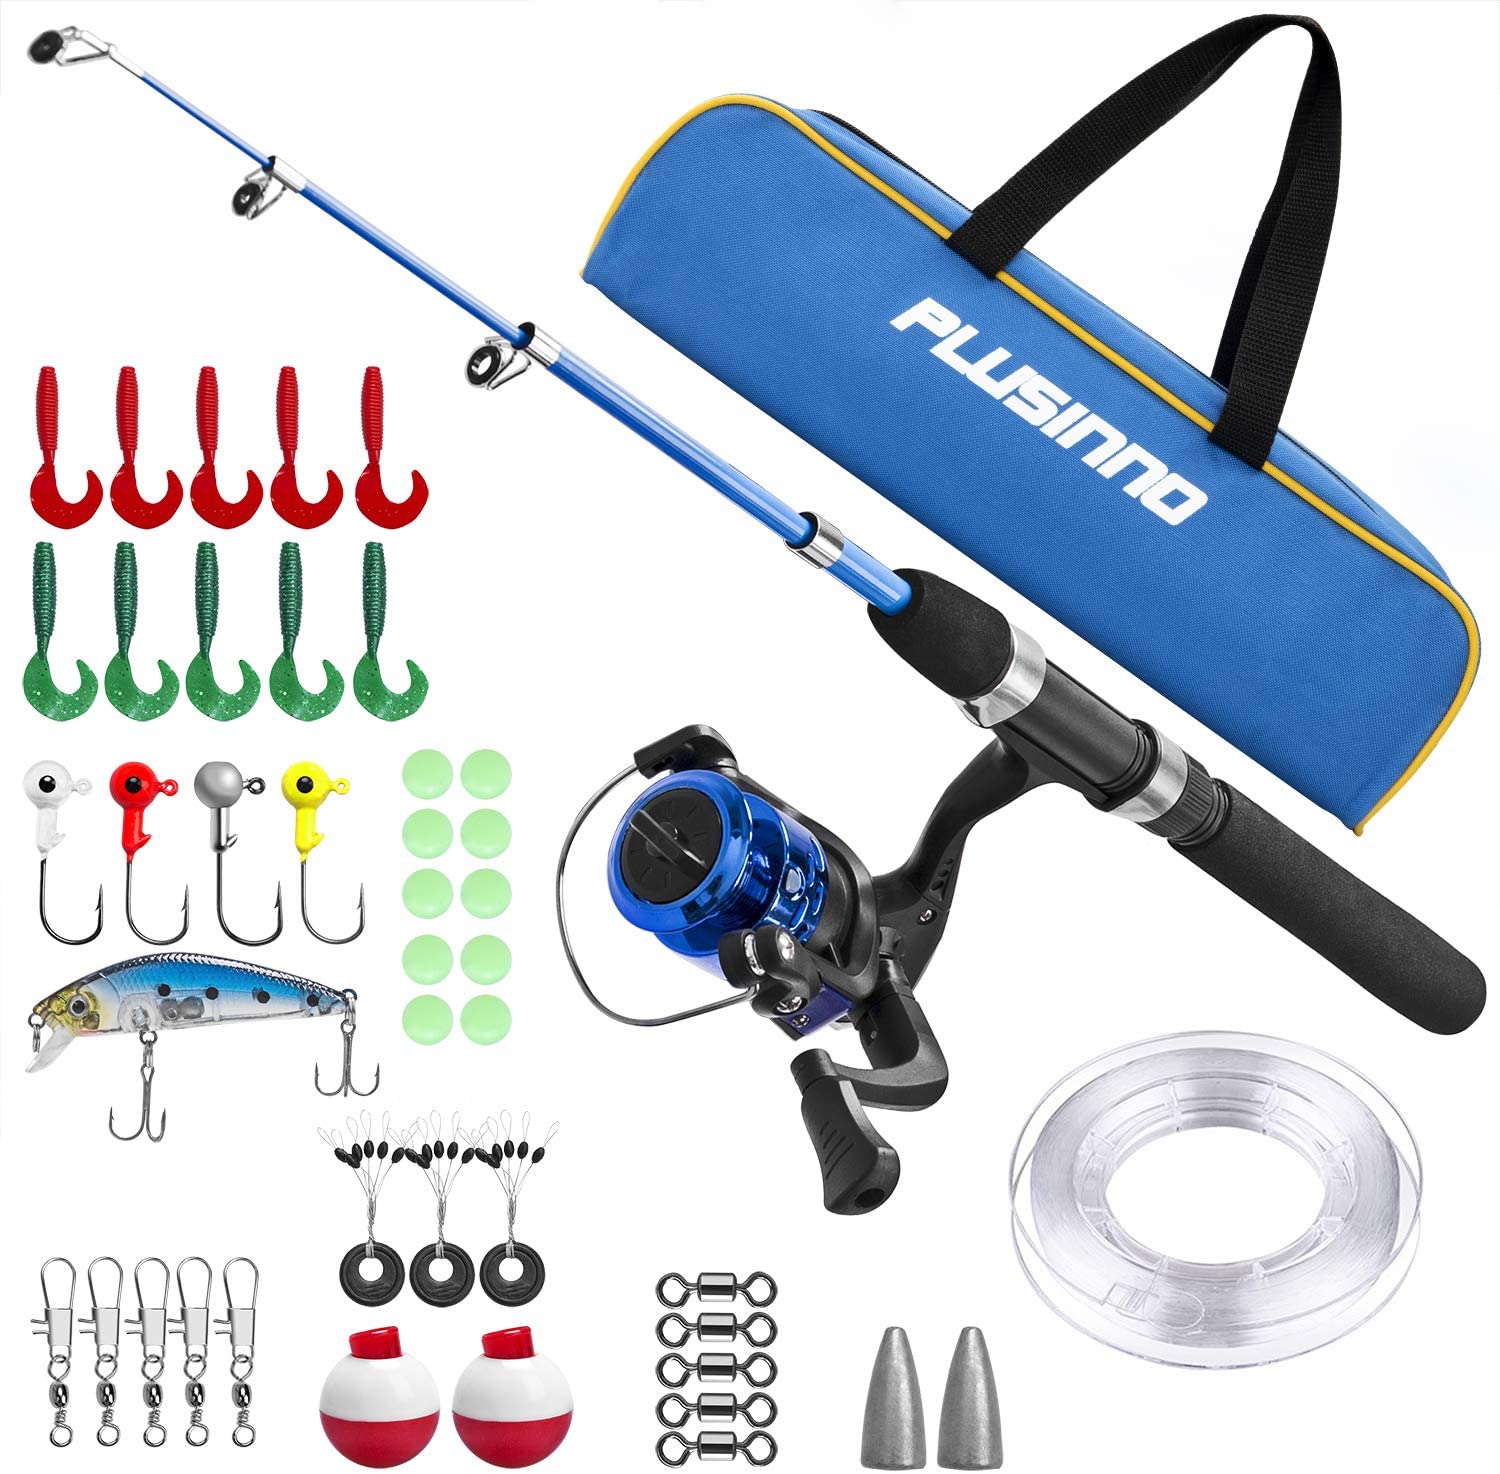 Kids Fishing Pole, Light and Portable Telescope fishing rod and reel combo